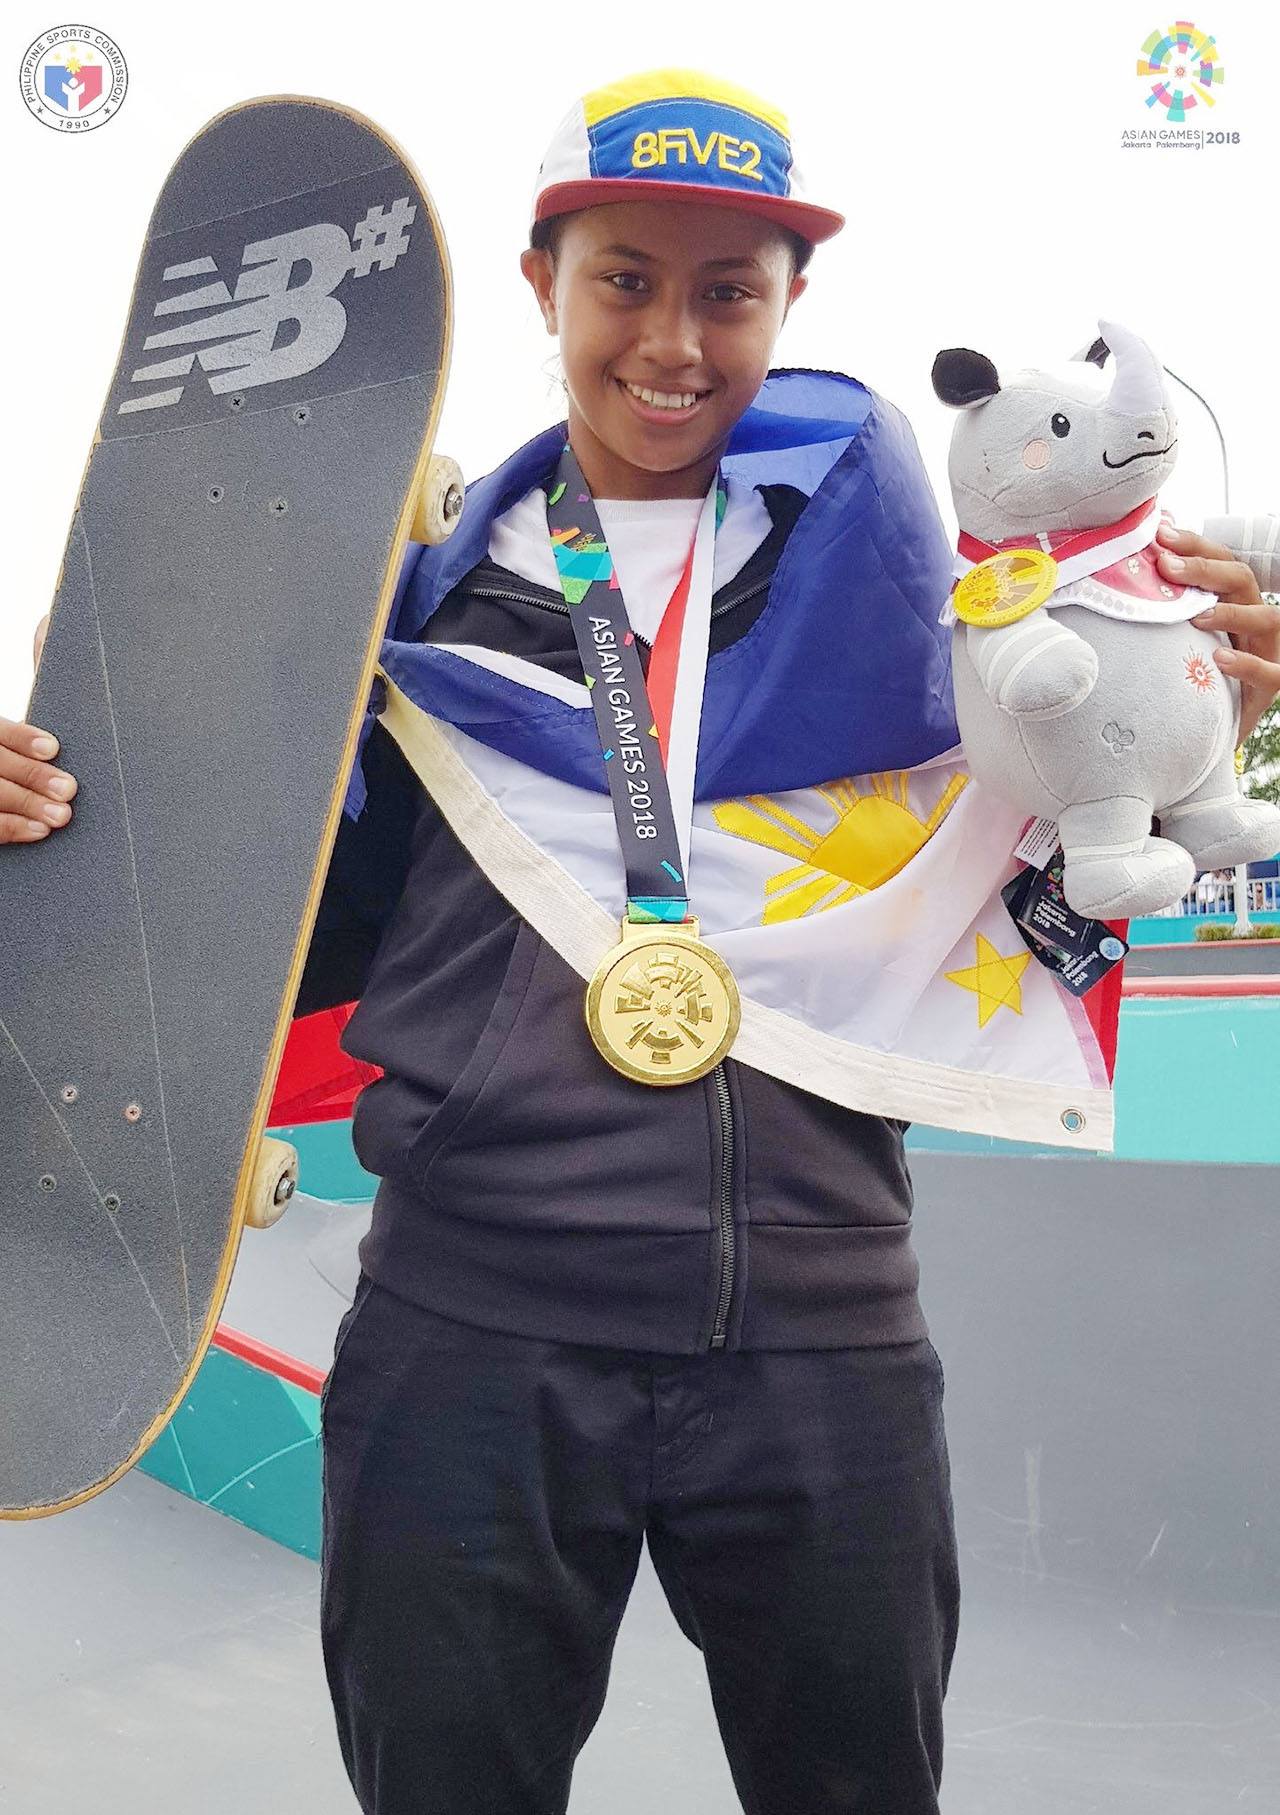 Margielyn Didal - 2018 Asian Games gold medalist